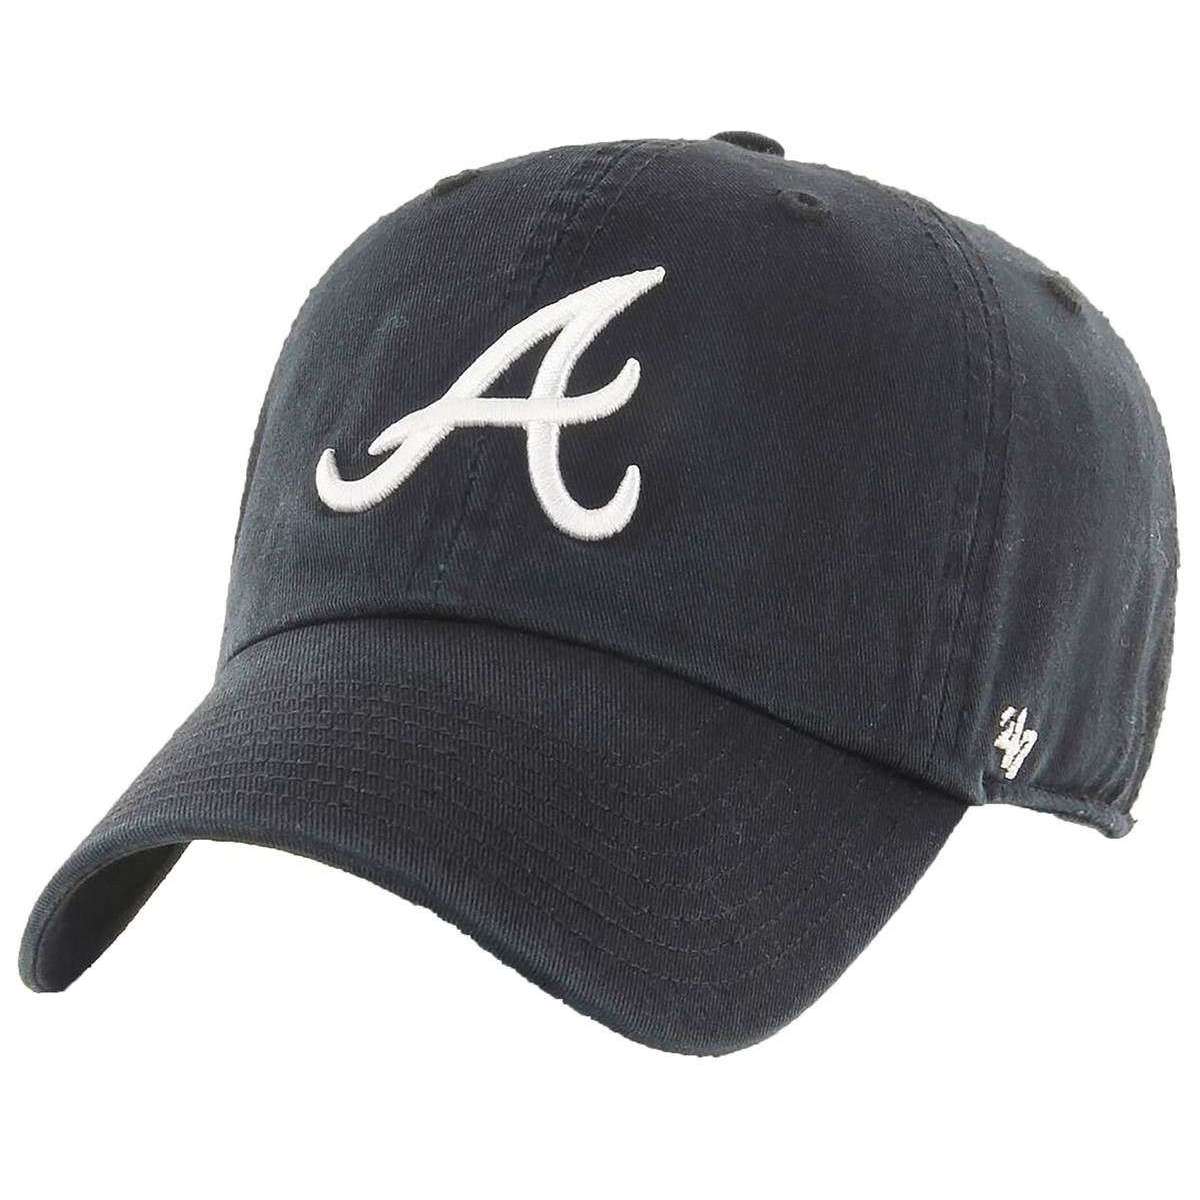 47 Brand Clean Up MLB Atlanta Braves Cap - Black/White